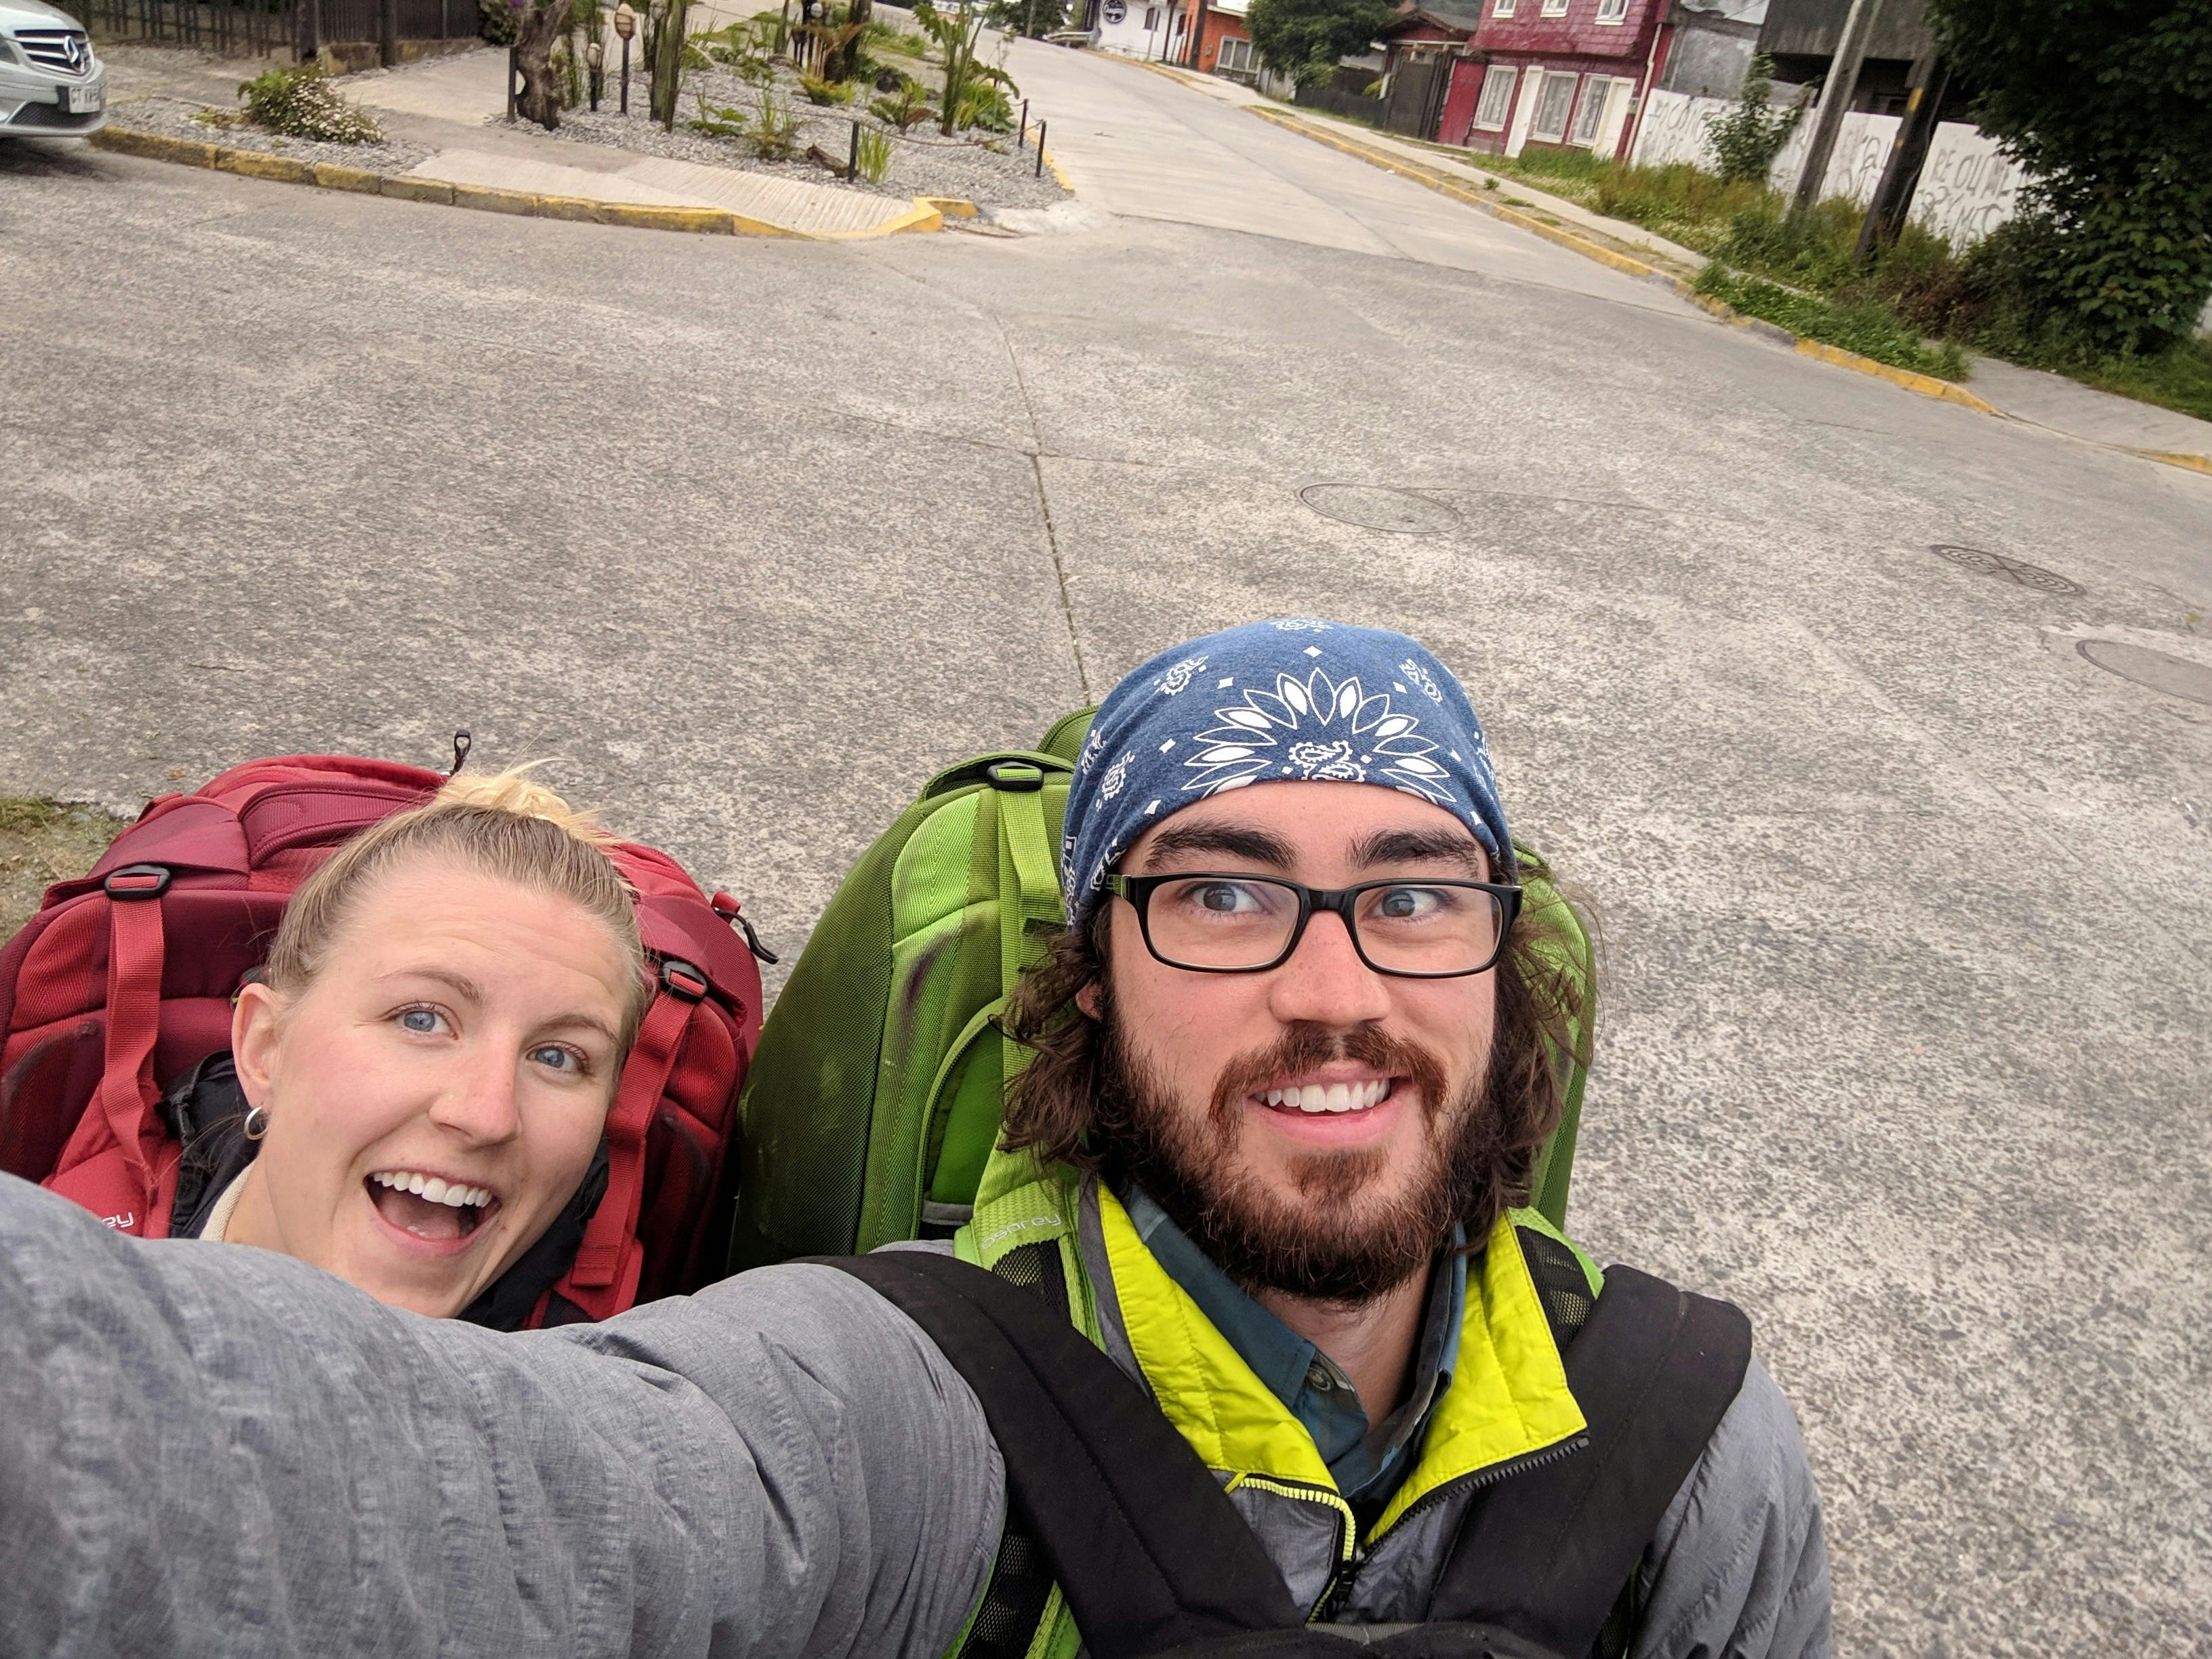 Gerrod and Lauren enjoying the walk with backpacks